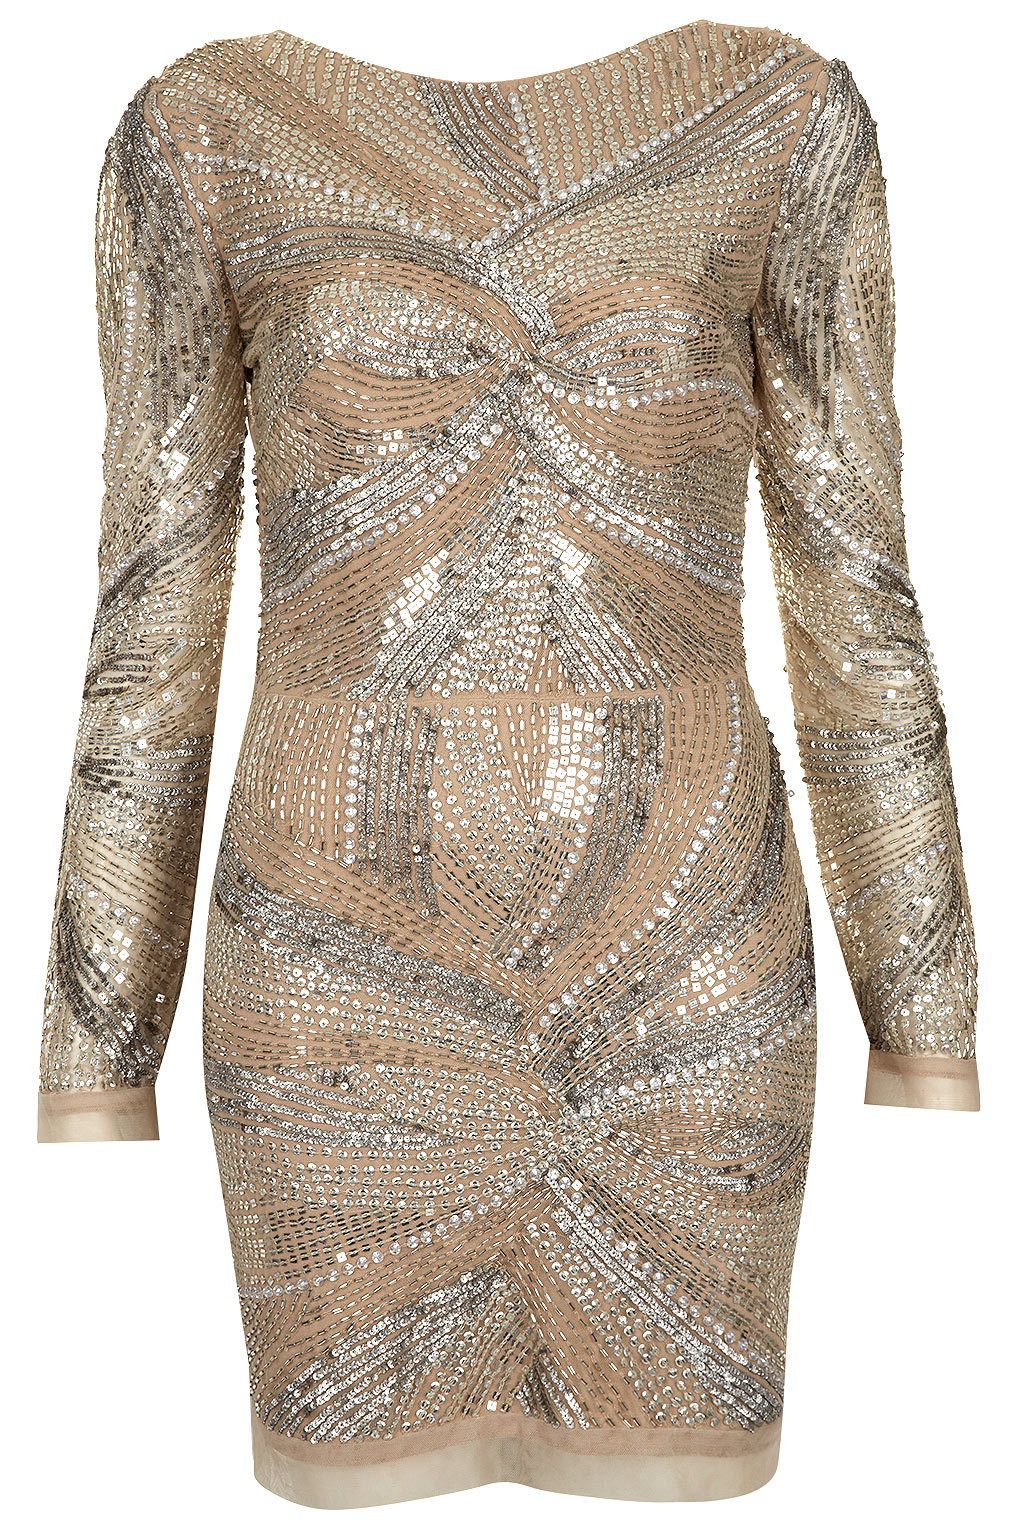 Lyst - Topshop Petite Embellished Dress in Metallic